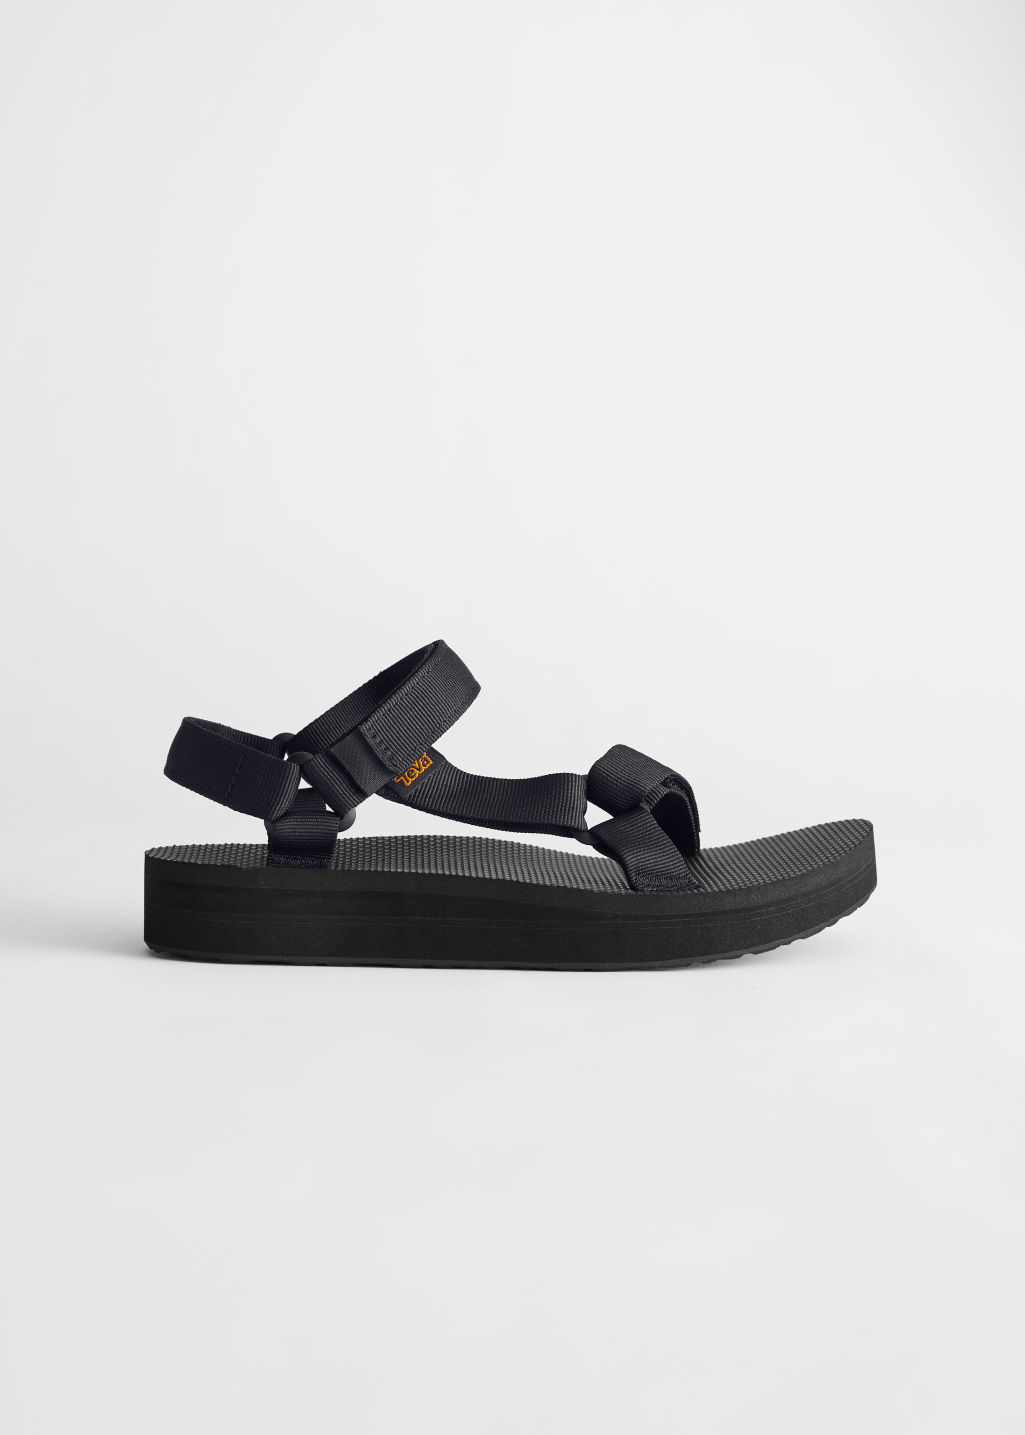 Teva Velcro Sandals - Black - Teva - & Other Stories